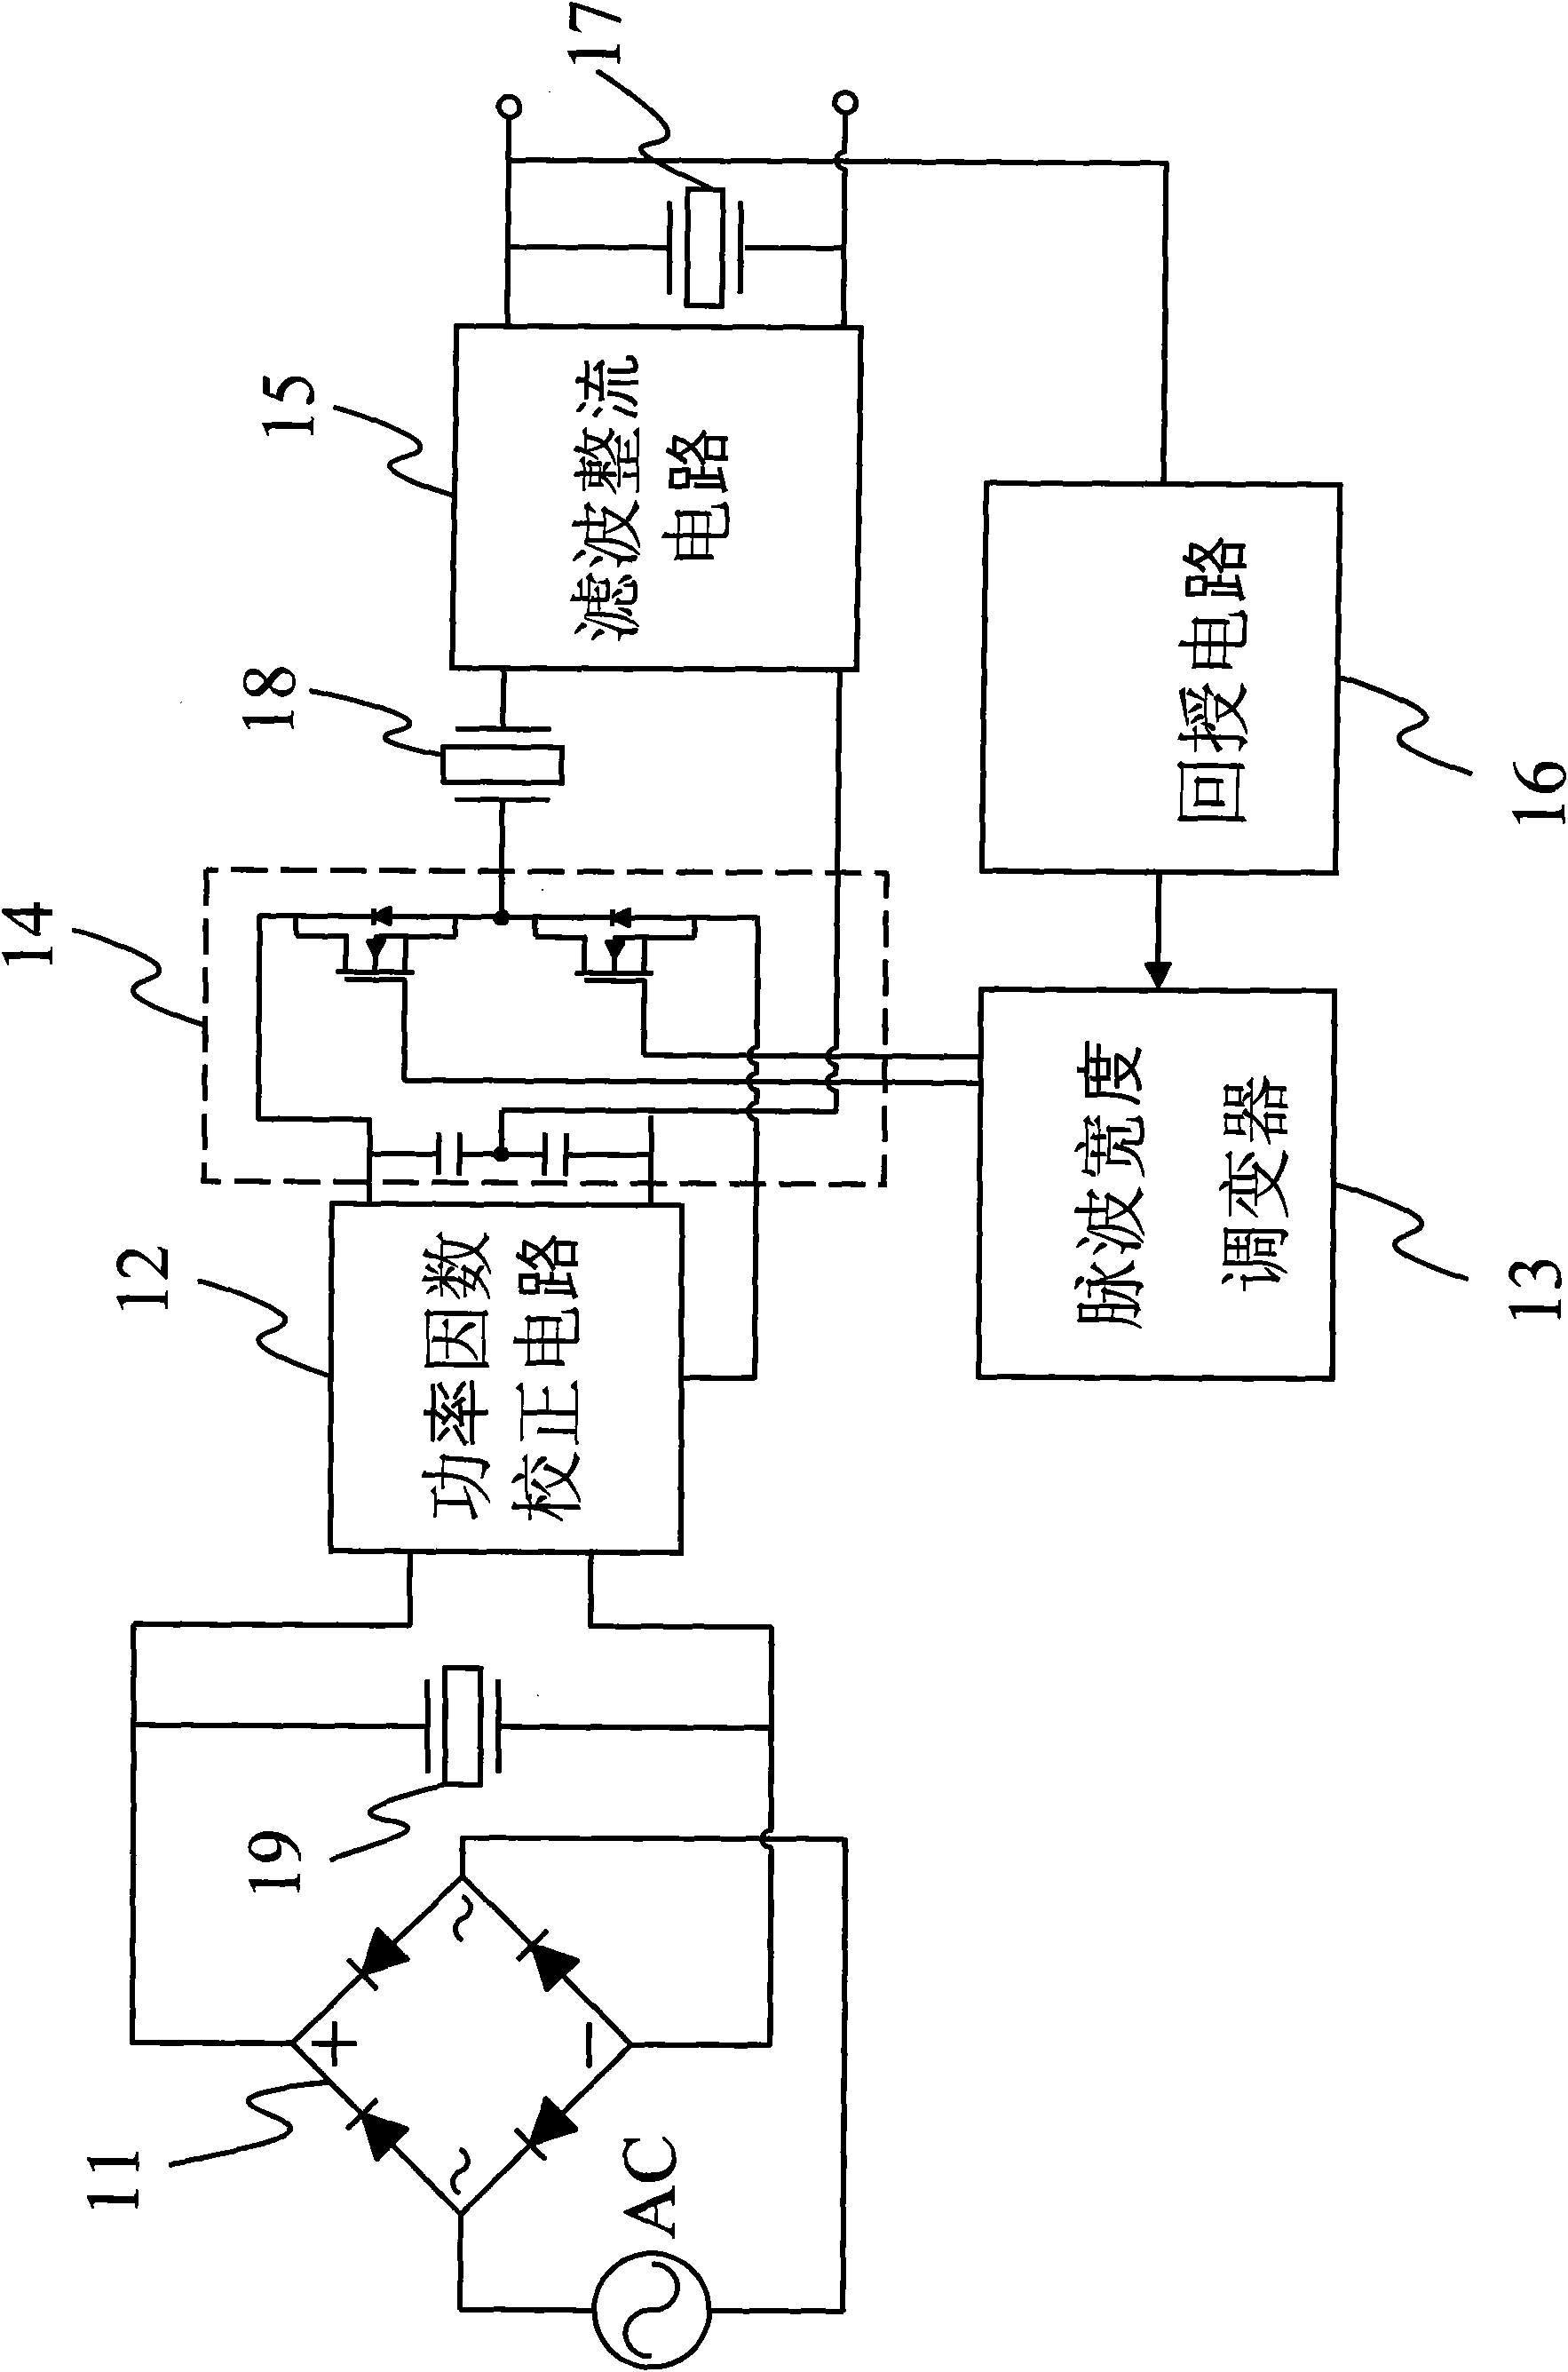 High-power output piezoelectric power converter